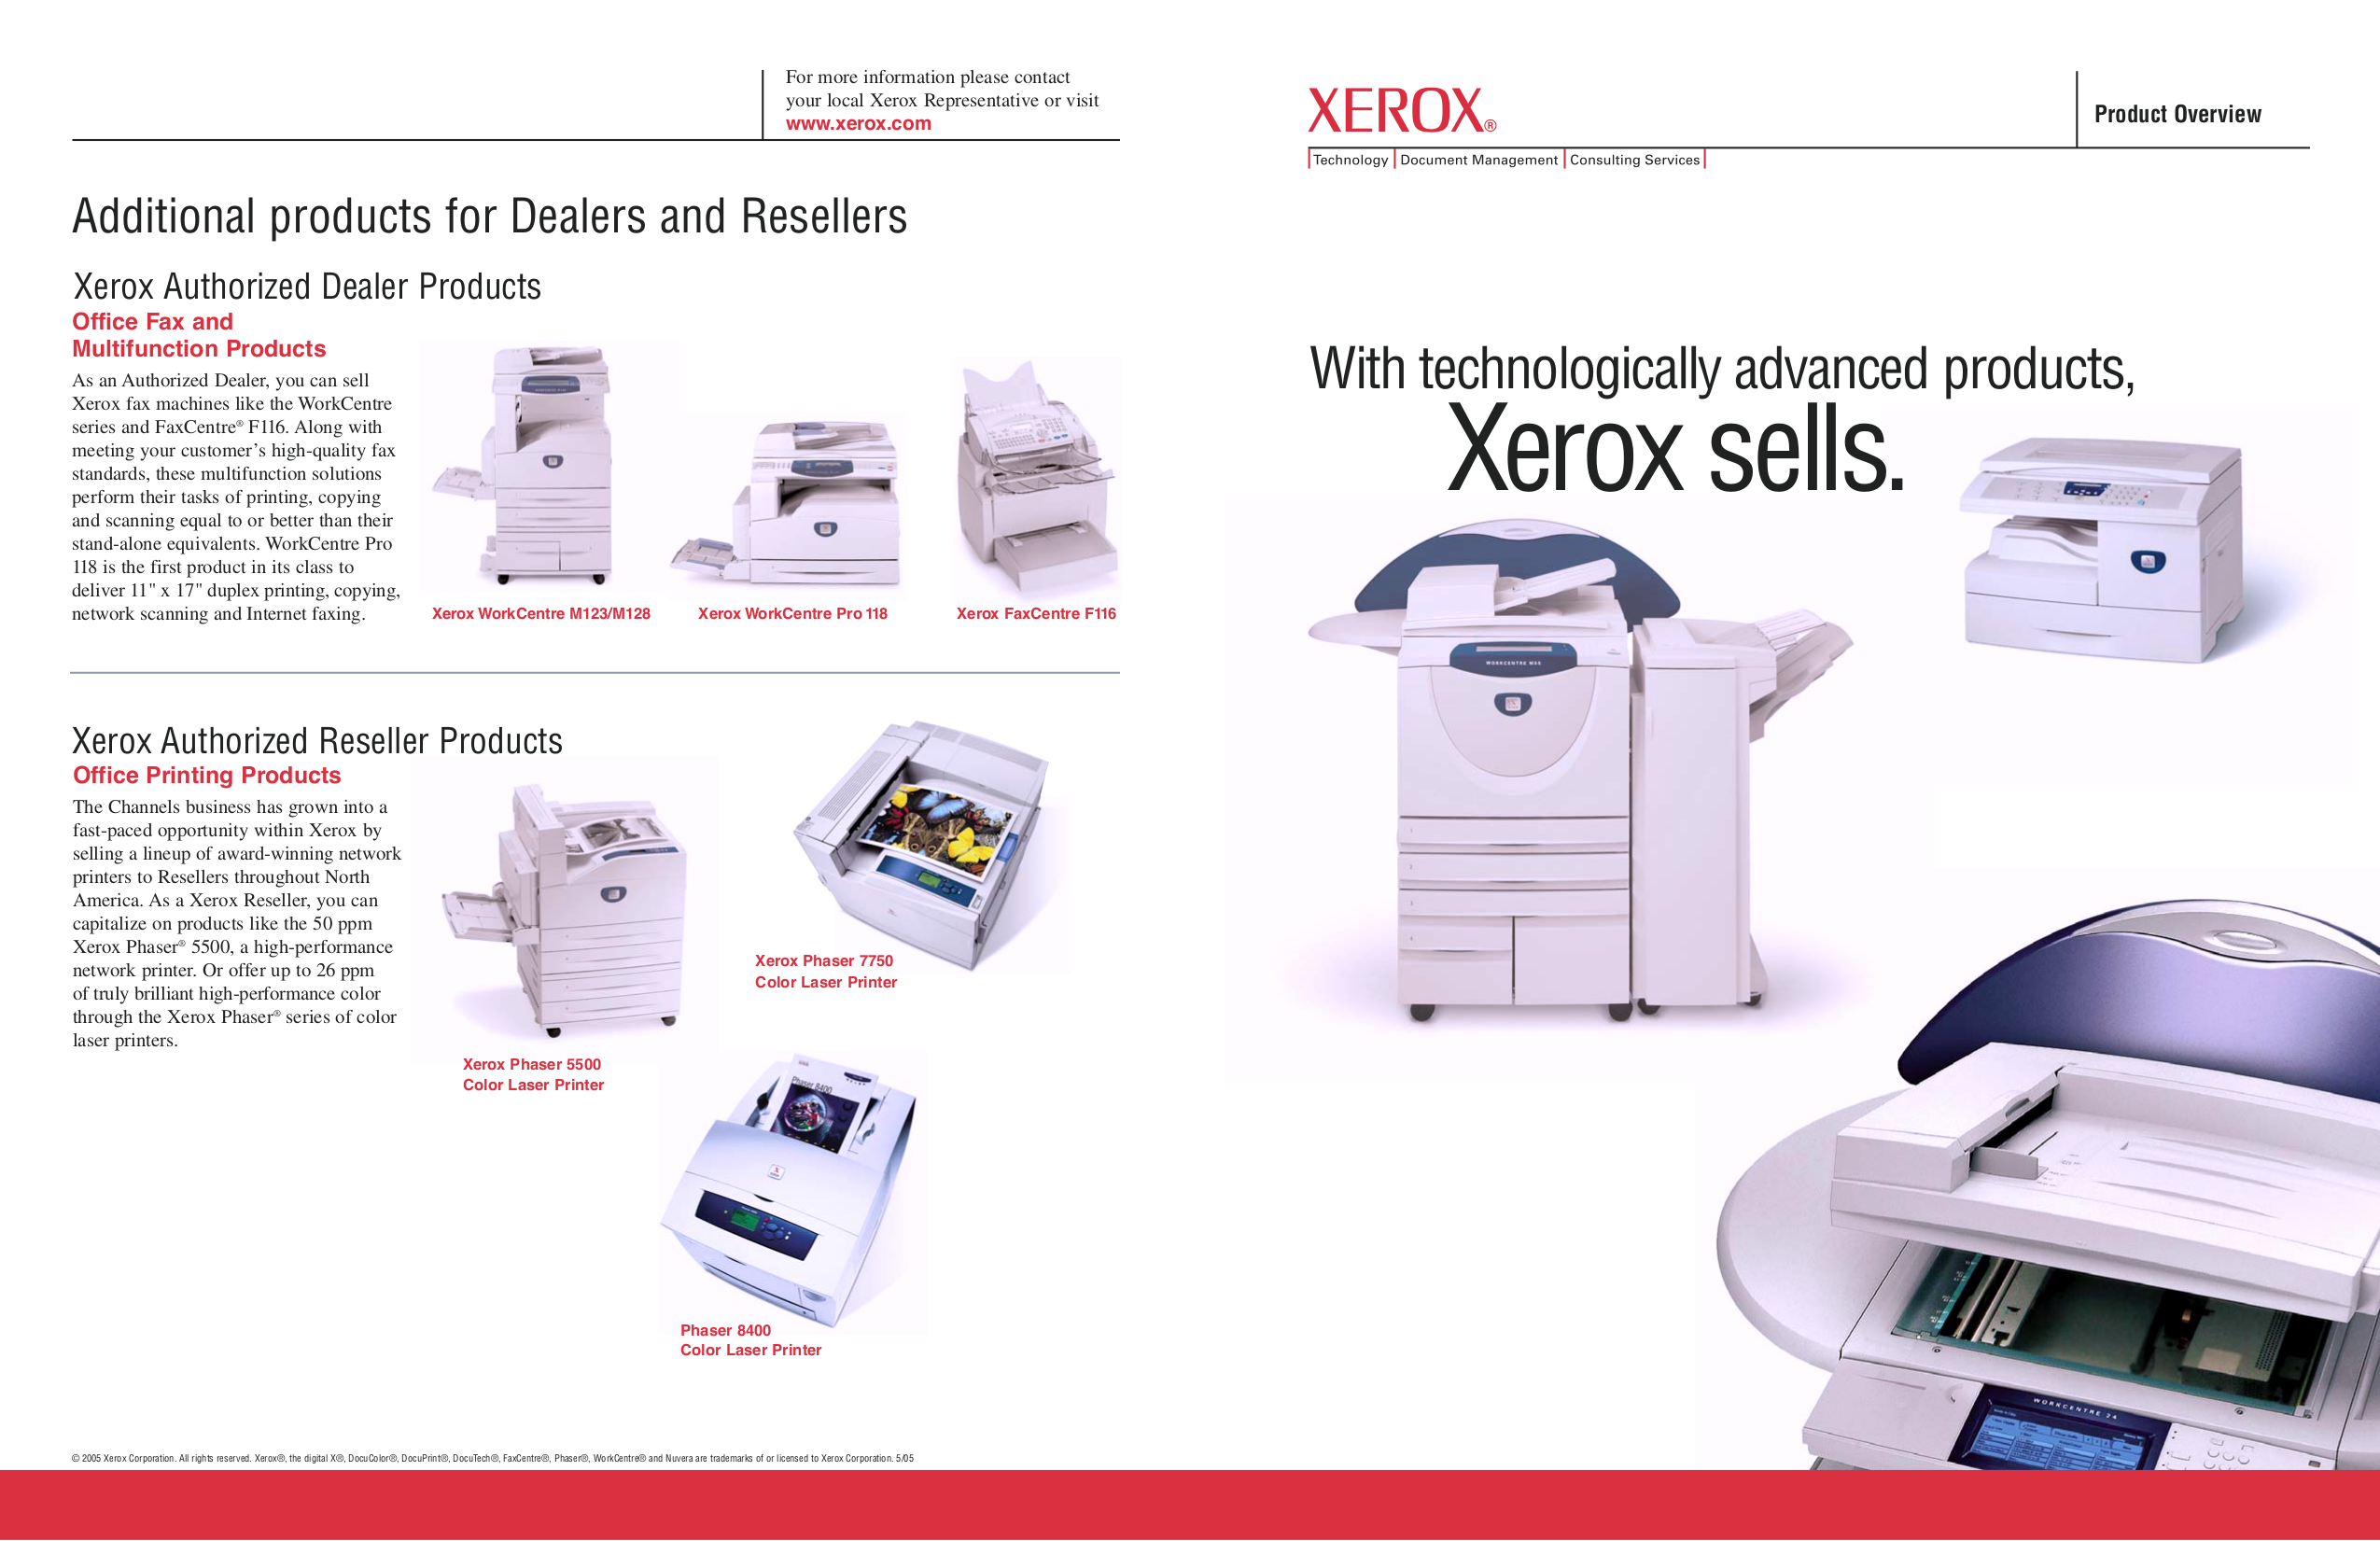 Принтер на английском языке. Xerox FAXCENTRE f116. Xerox 116 принтер. Xerox 7750. Типы принтеров Xerox.